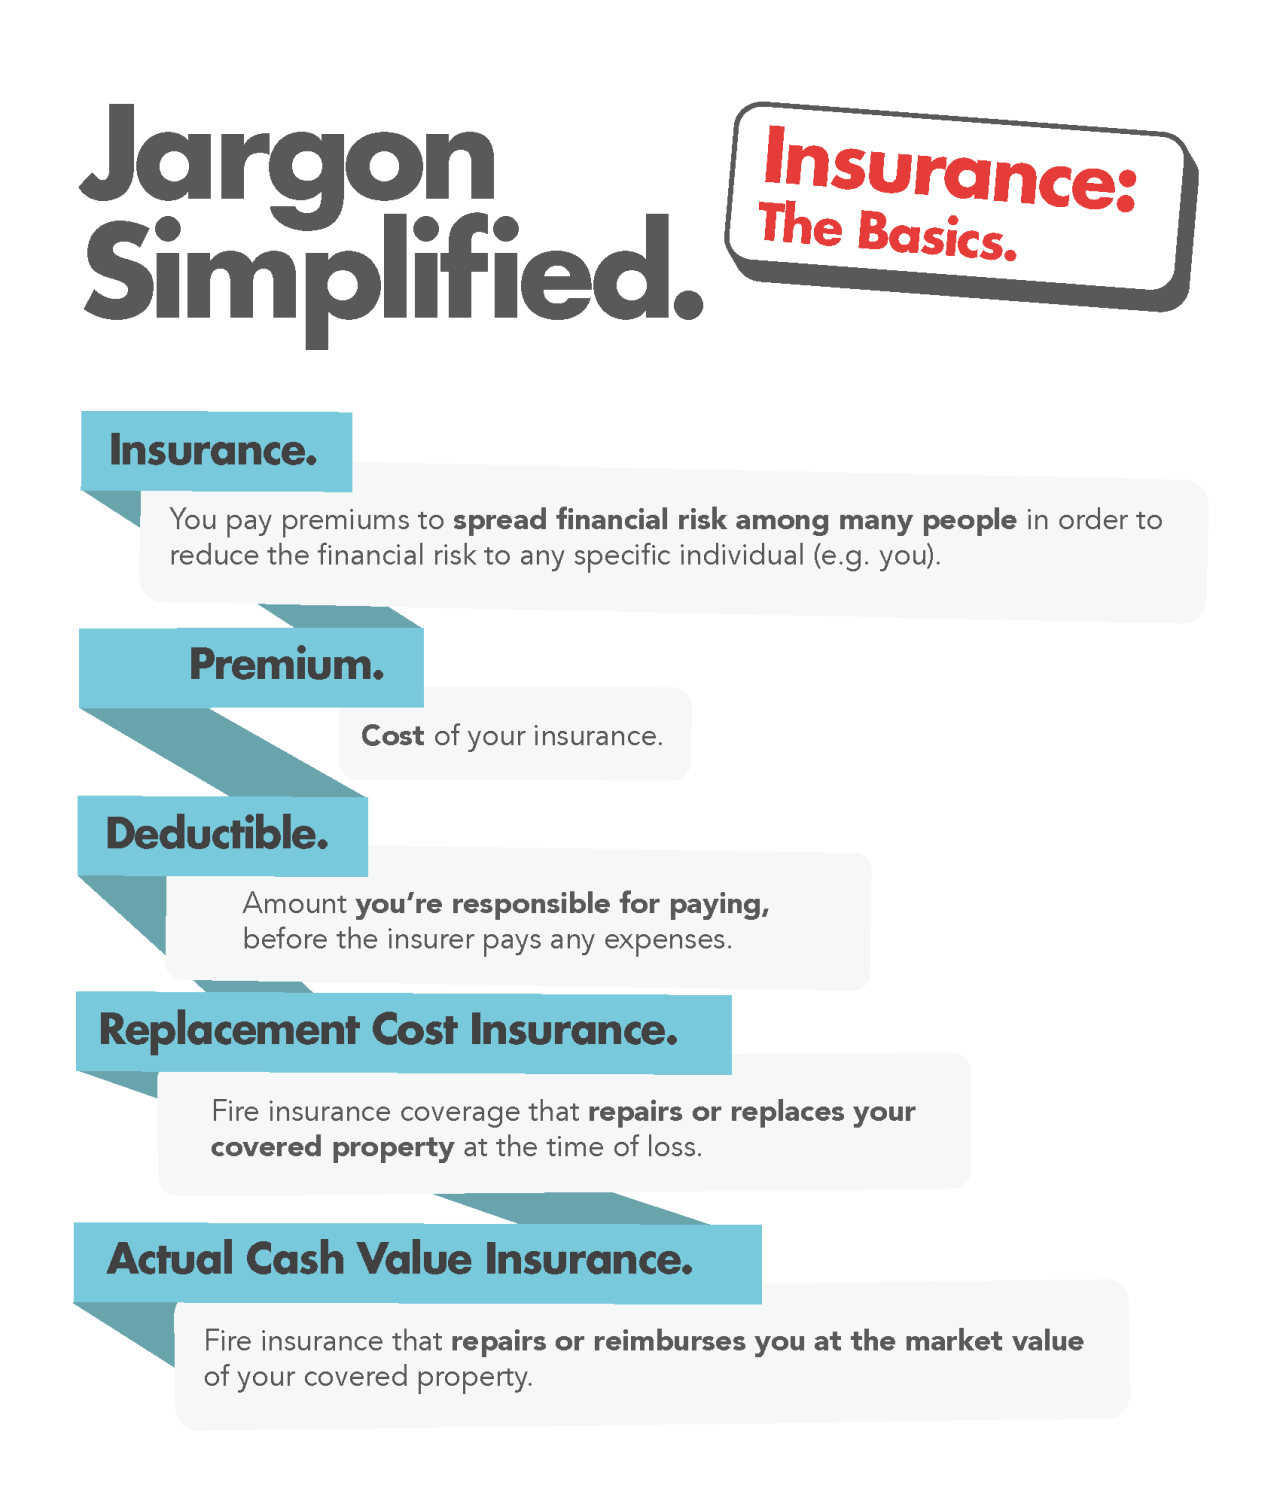 financial-jargon-simplified-insurance-basics-infographic